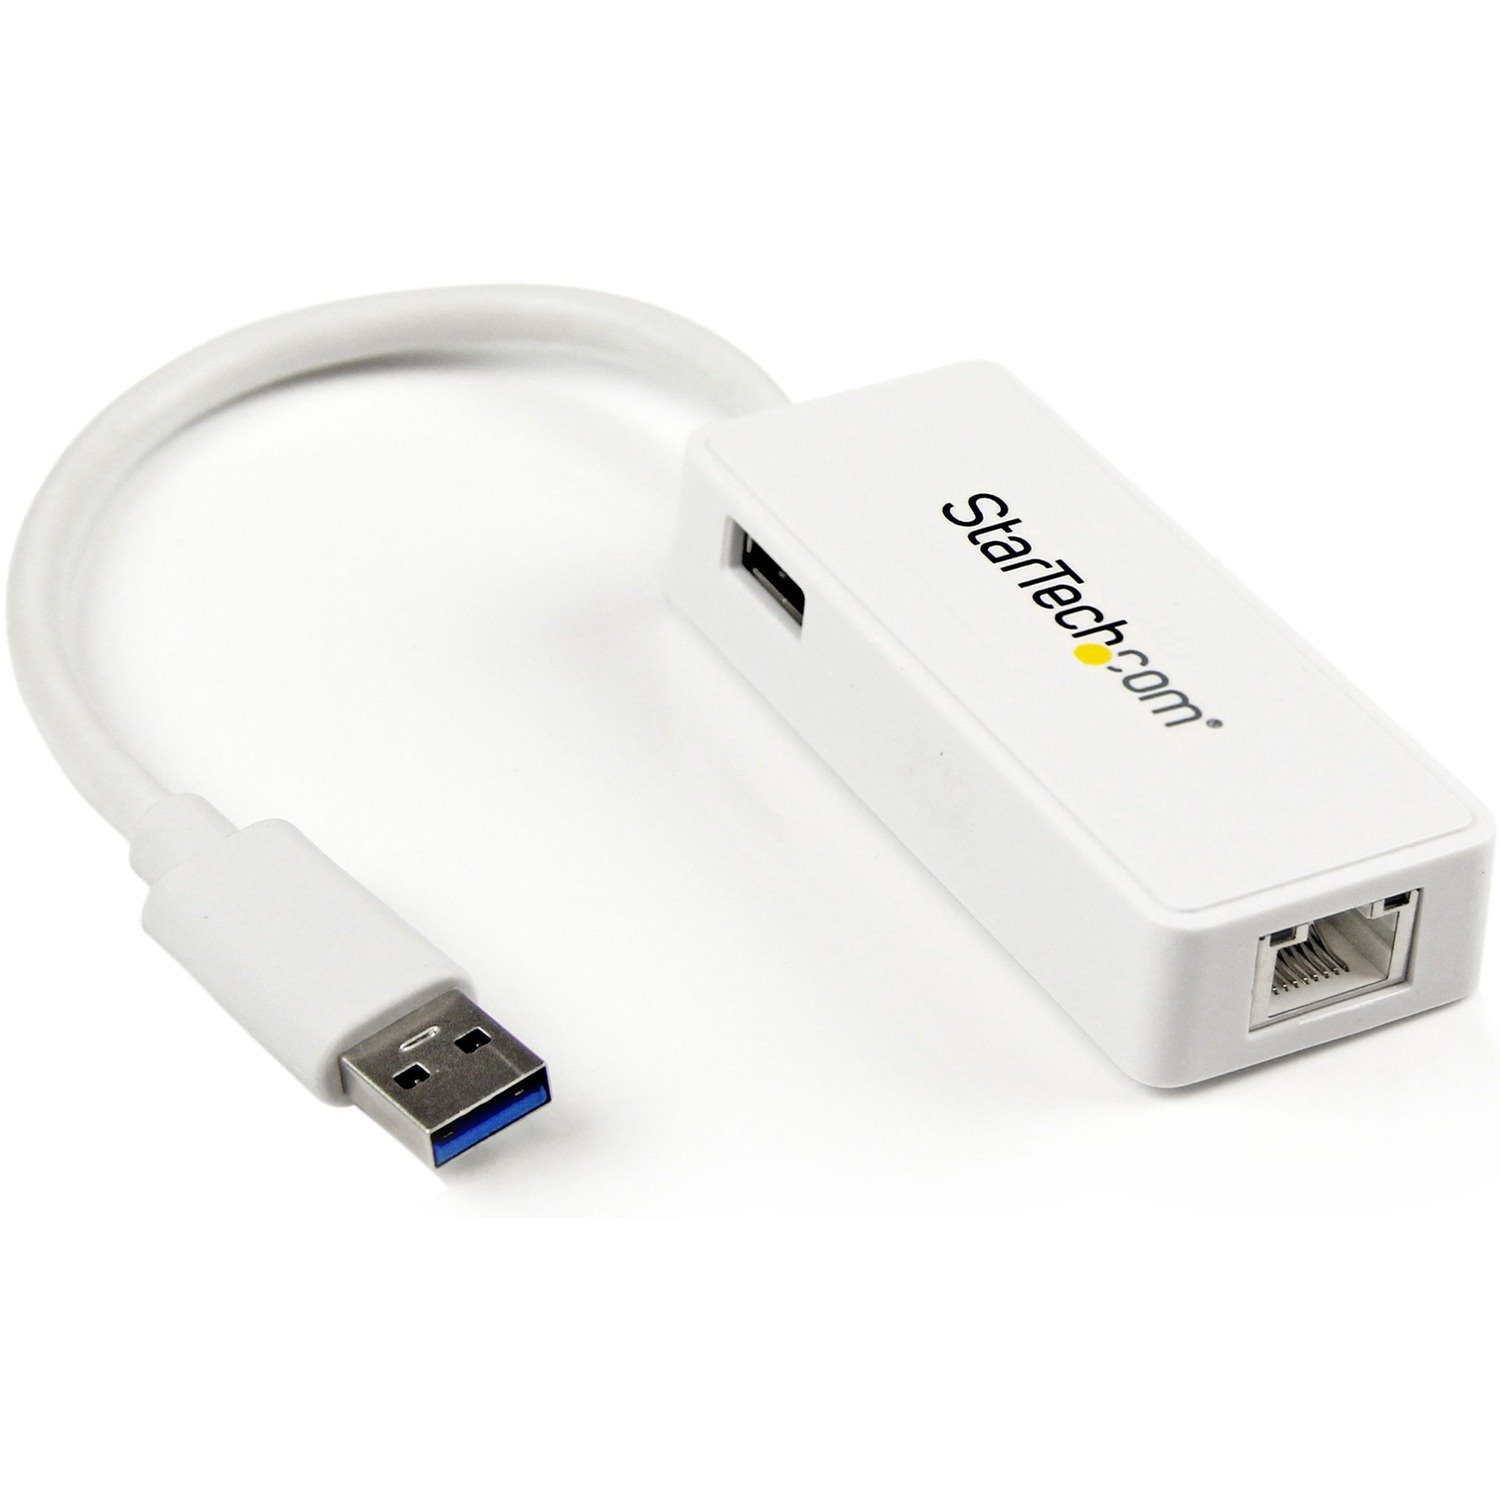 StarTech.com Gigabit Ethernet Adapter for Notebook - 10/100/1000Base-T - Desktop